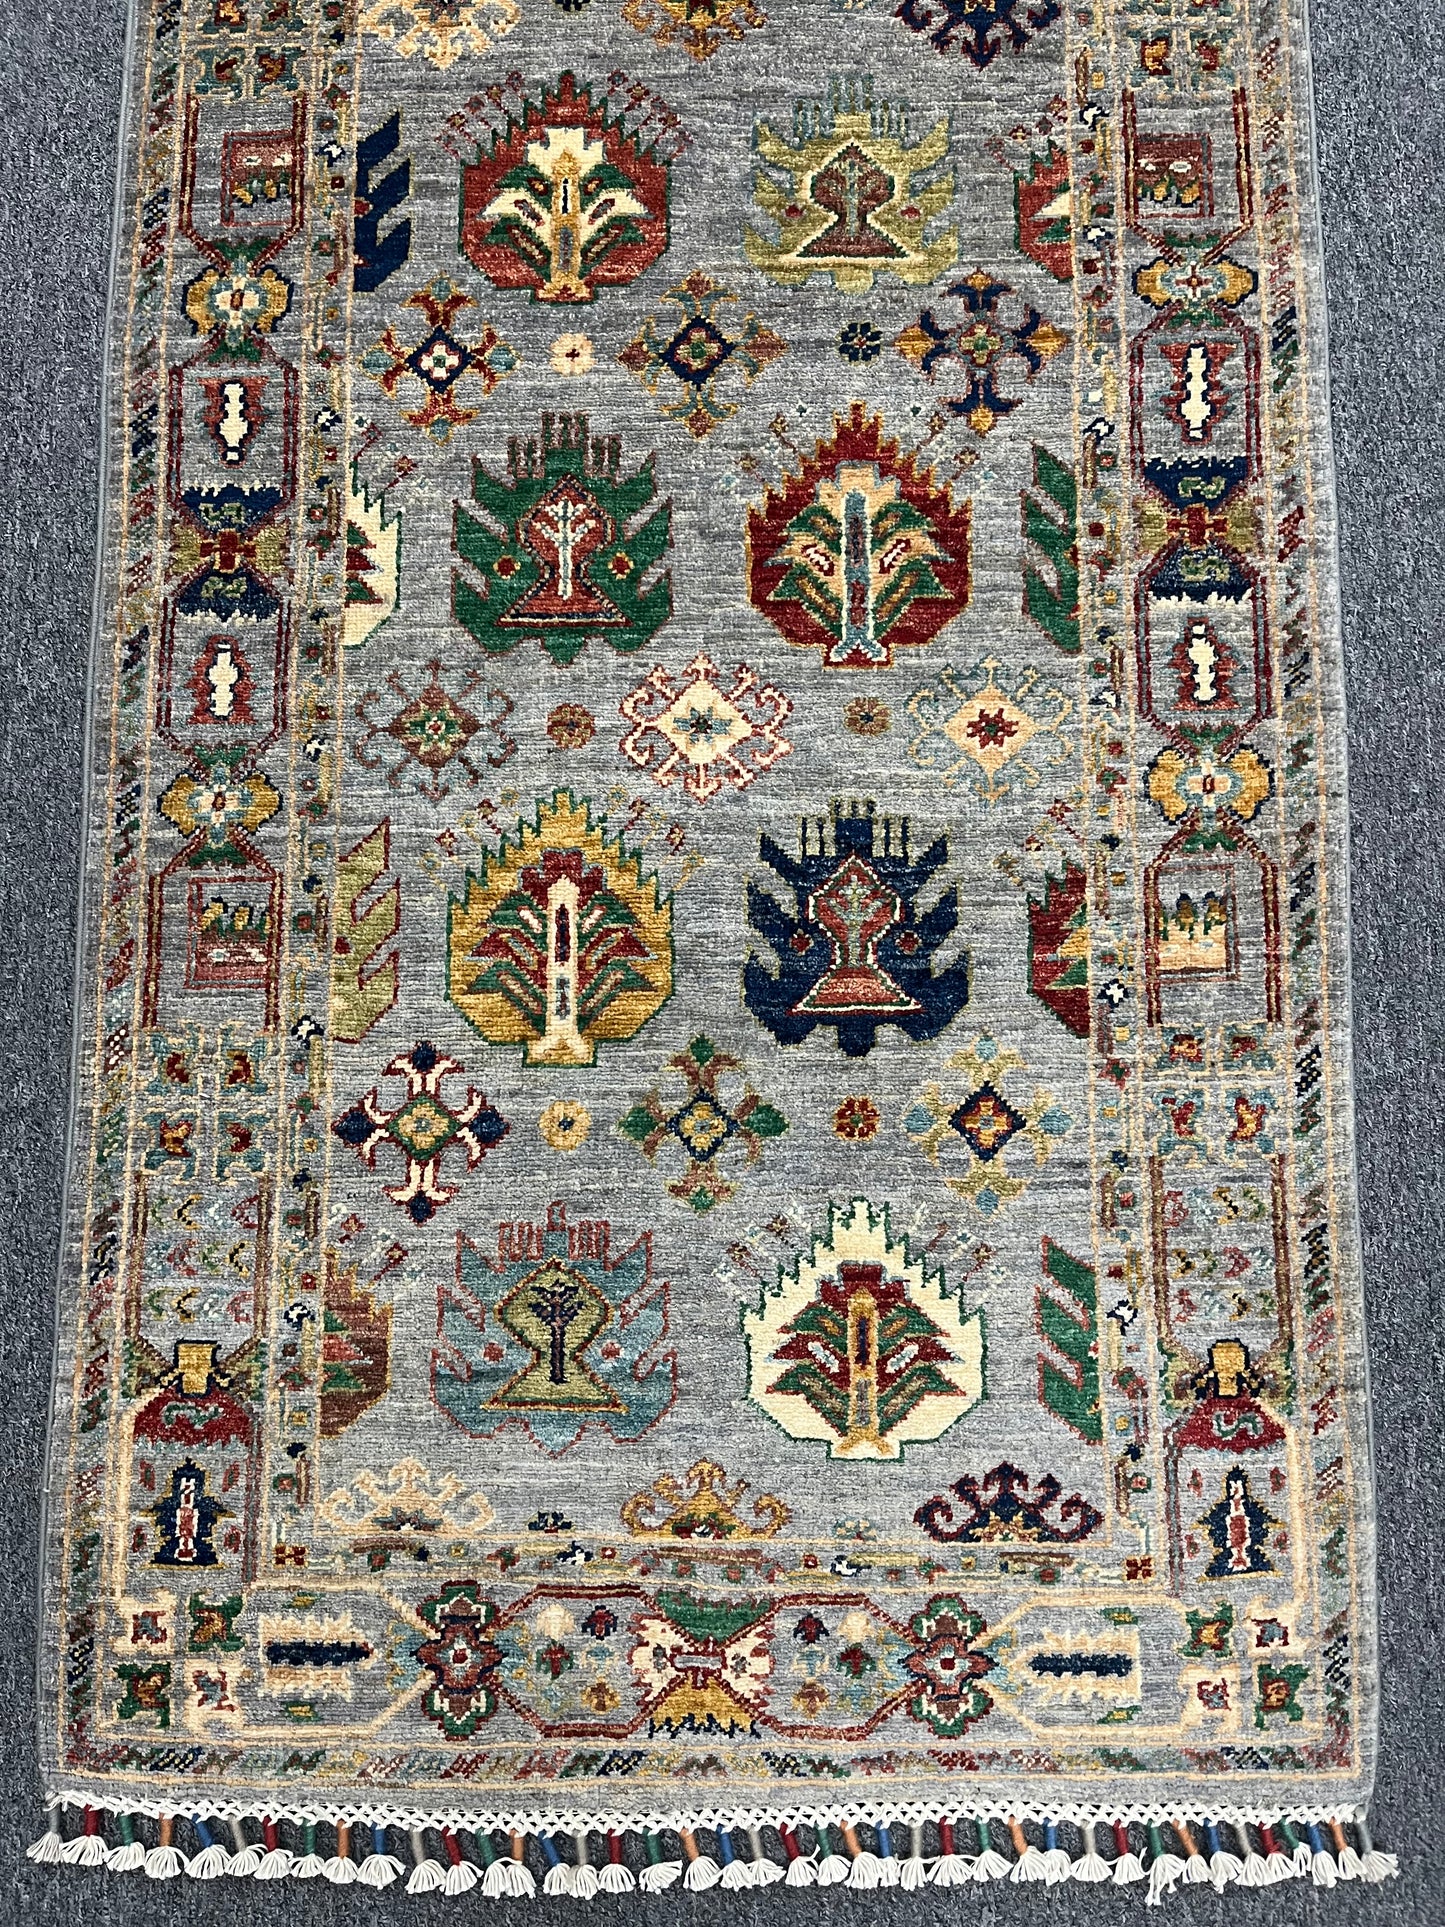 2' 8"X 10' Floral Mahal Handmade Wool Runner Rug # 13971